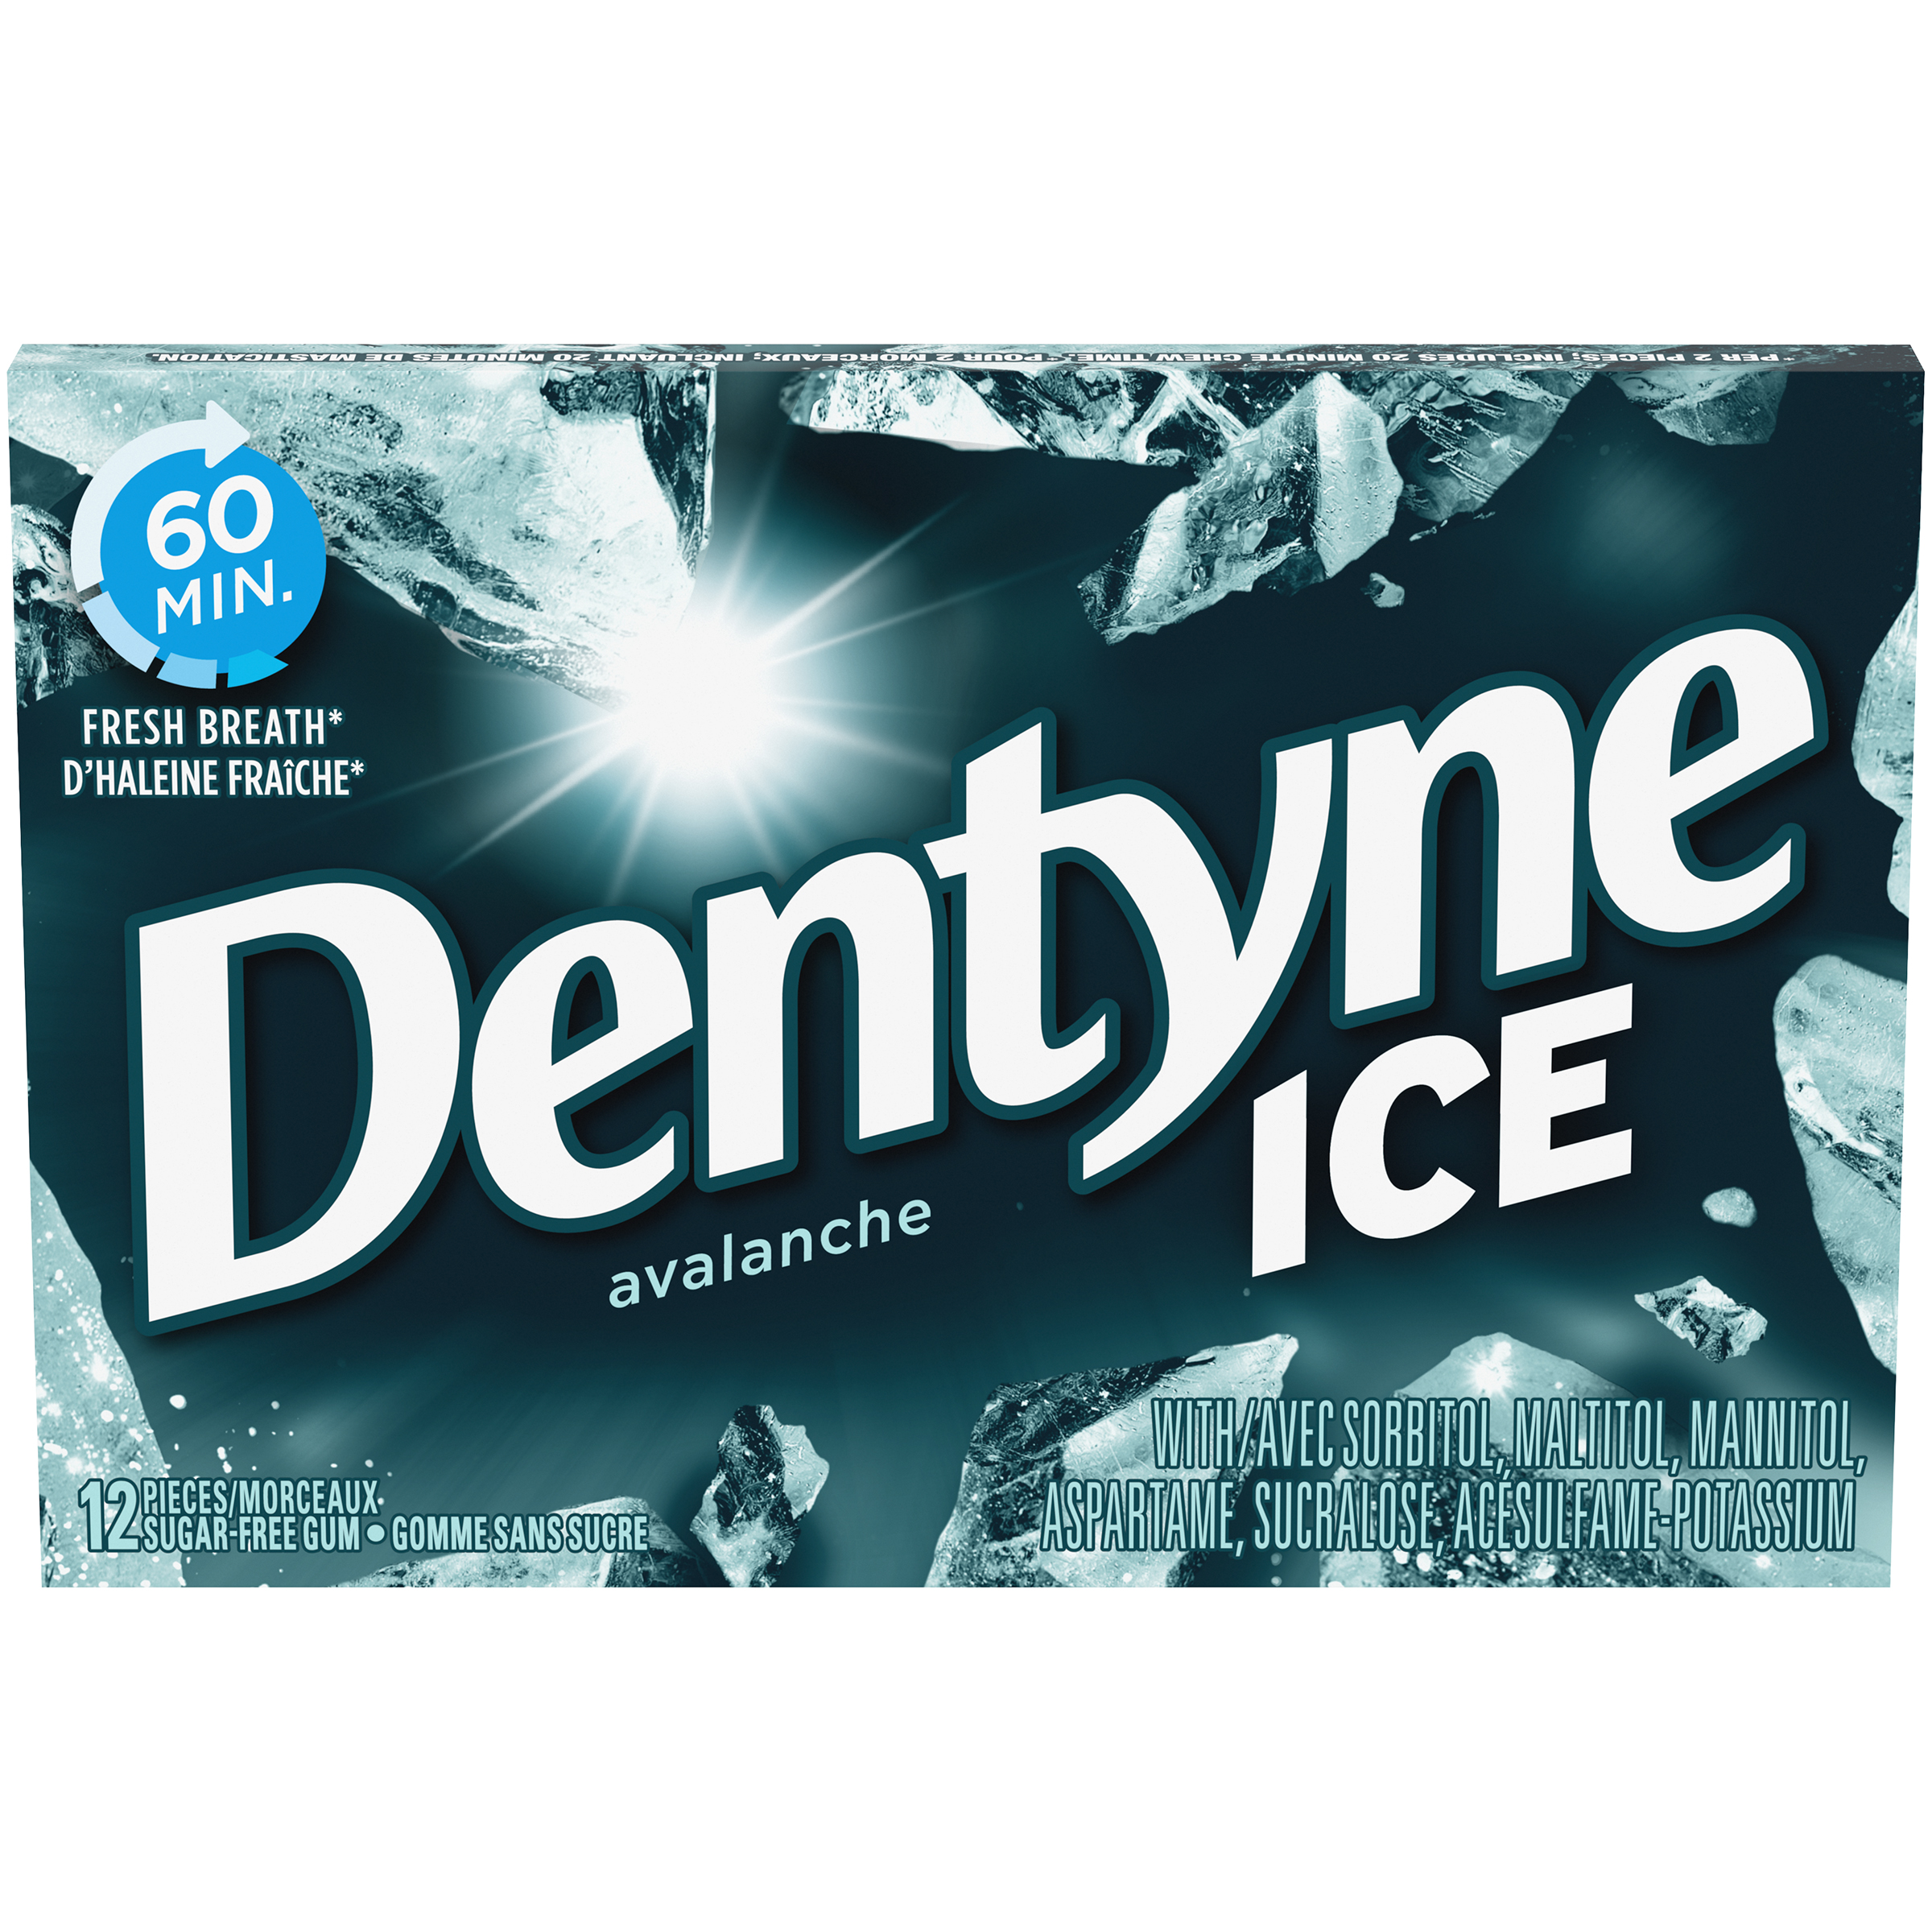 Dentyne Ice Avalanche, Sugar Free Gum, 1 Pack (12 Pieces)